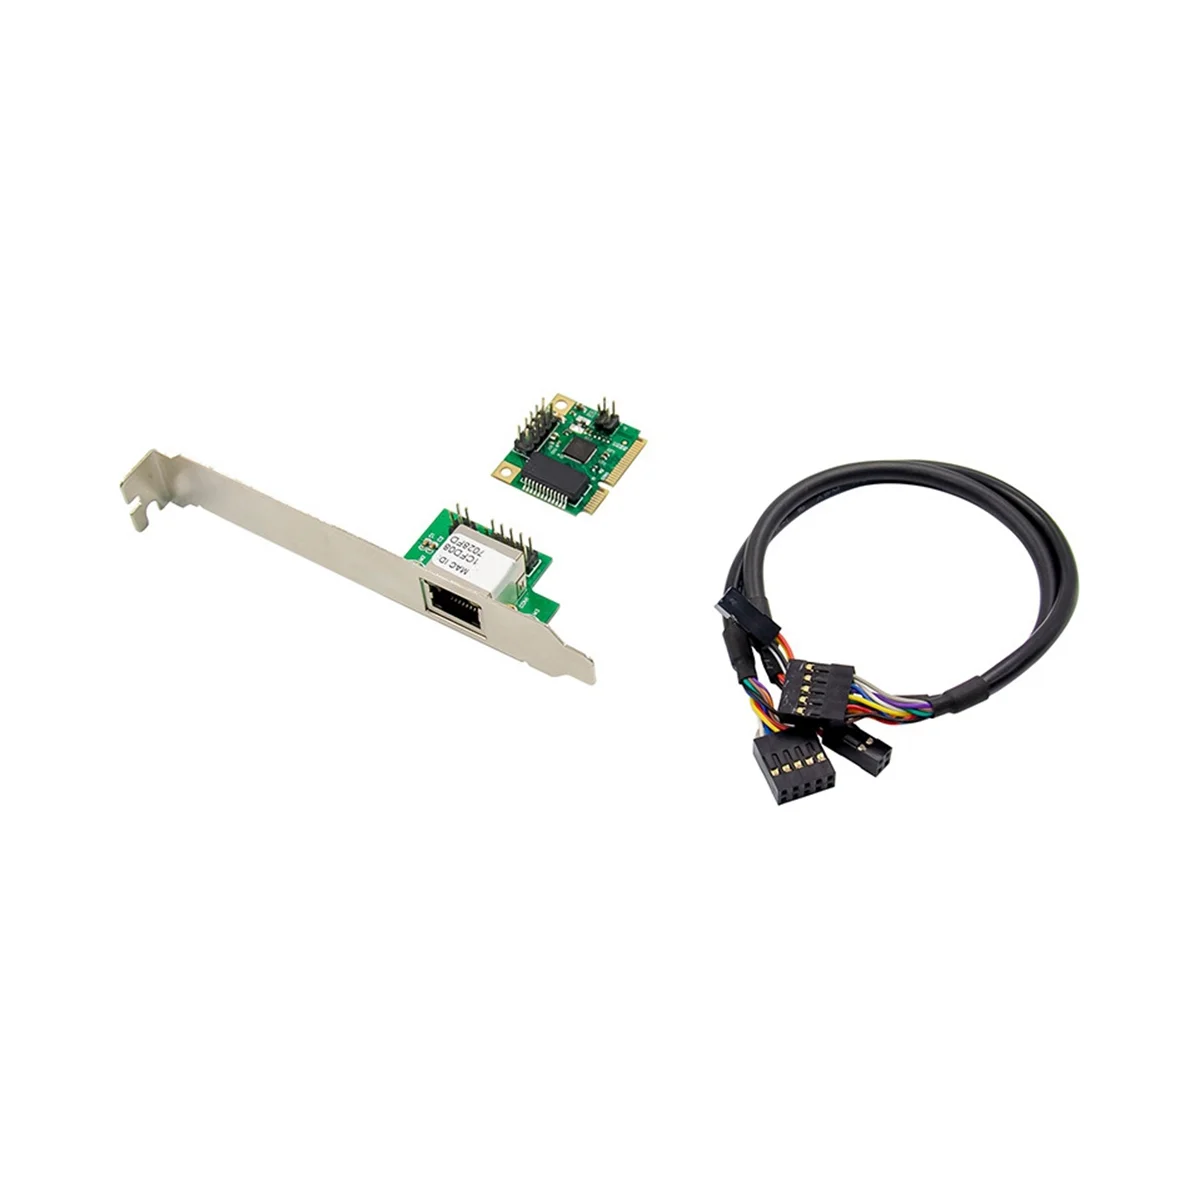 

2.5Gb Network Card 2500Mbps Gigabit Ethernet Card Lan Adapter 1 Port RJ45 Mini PCIe Network Adapter for PC Desktop